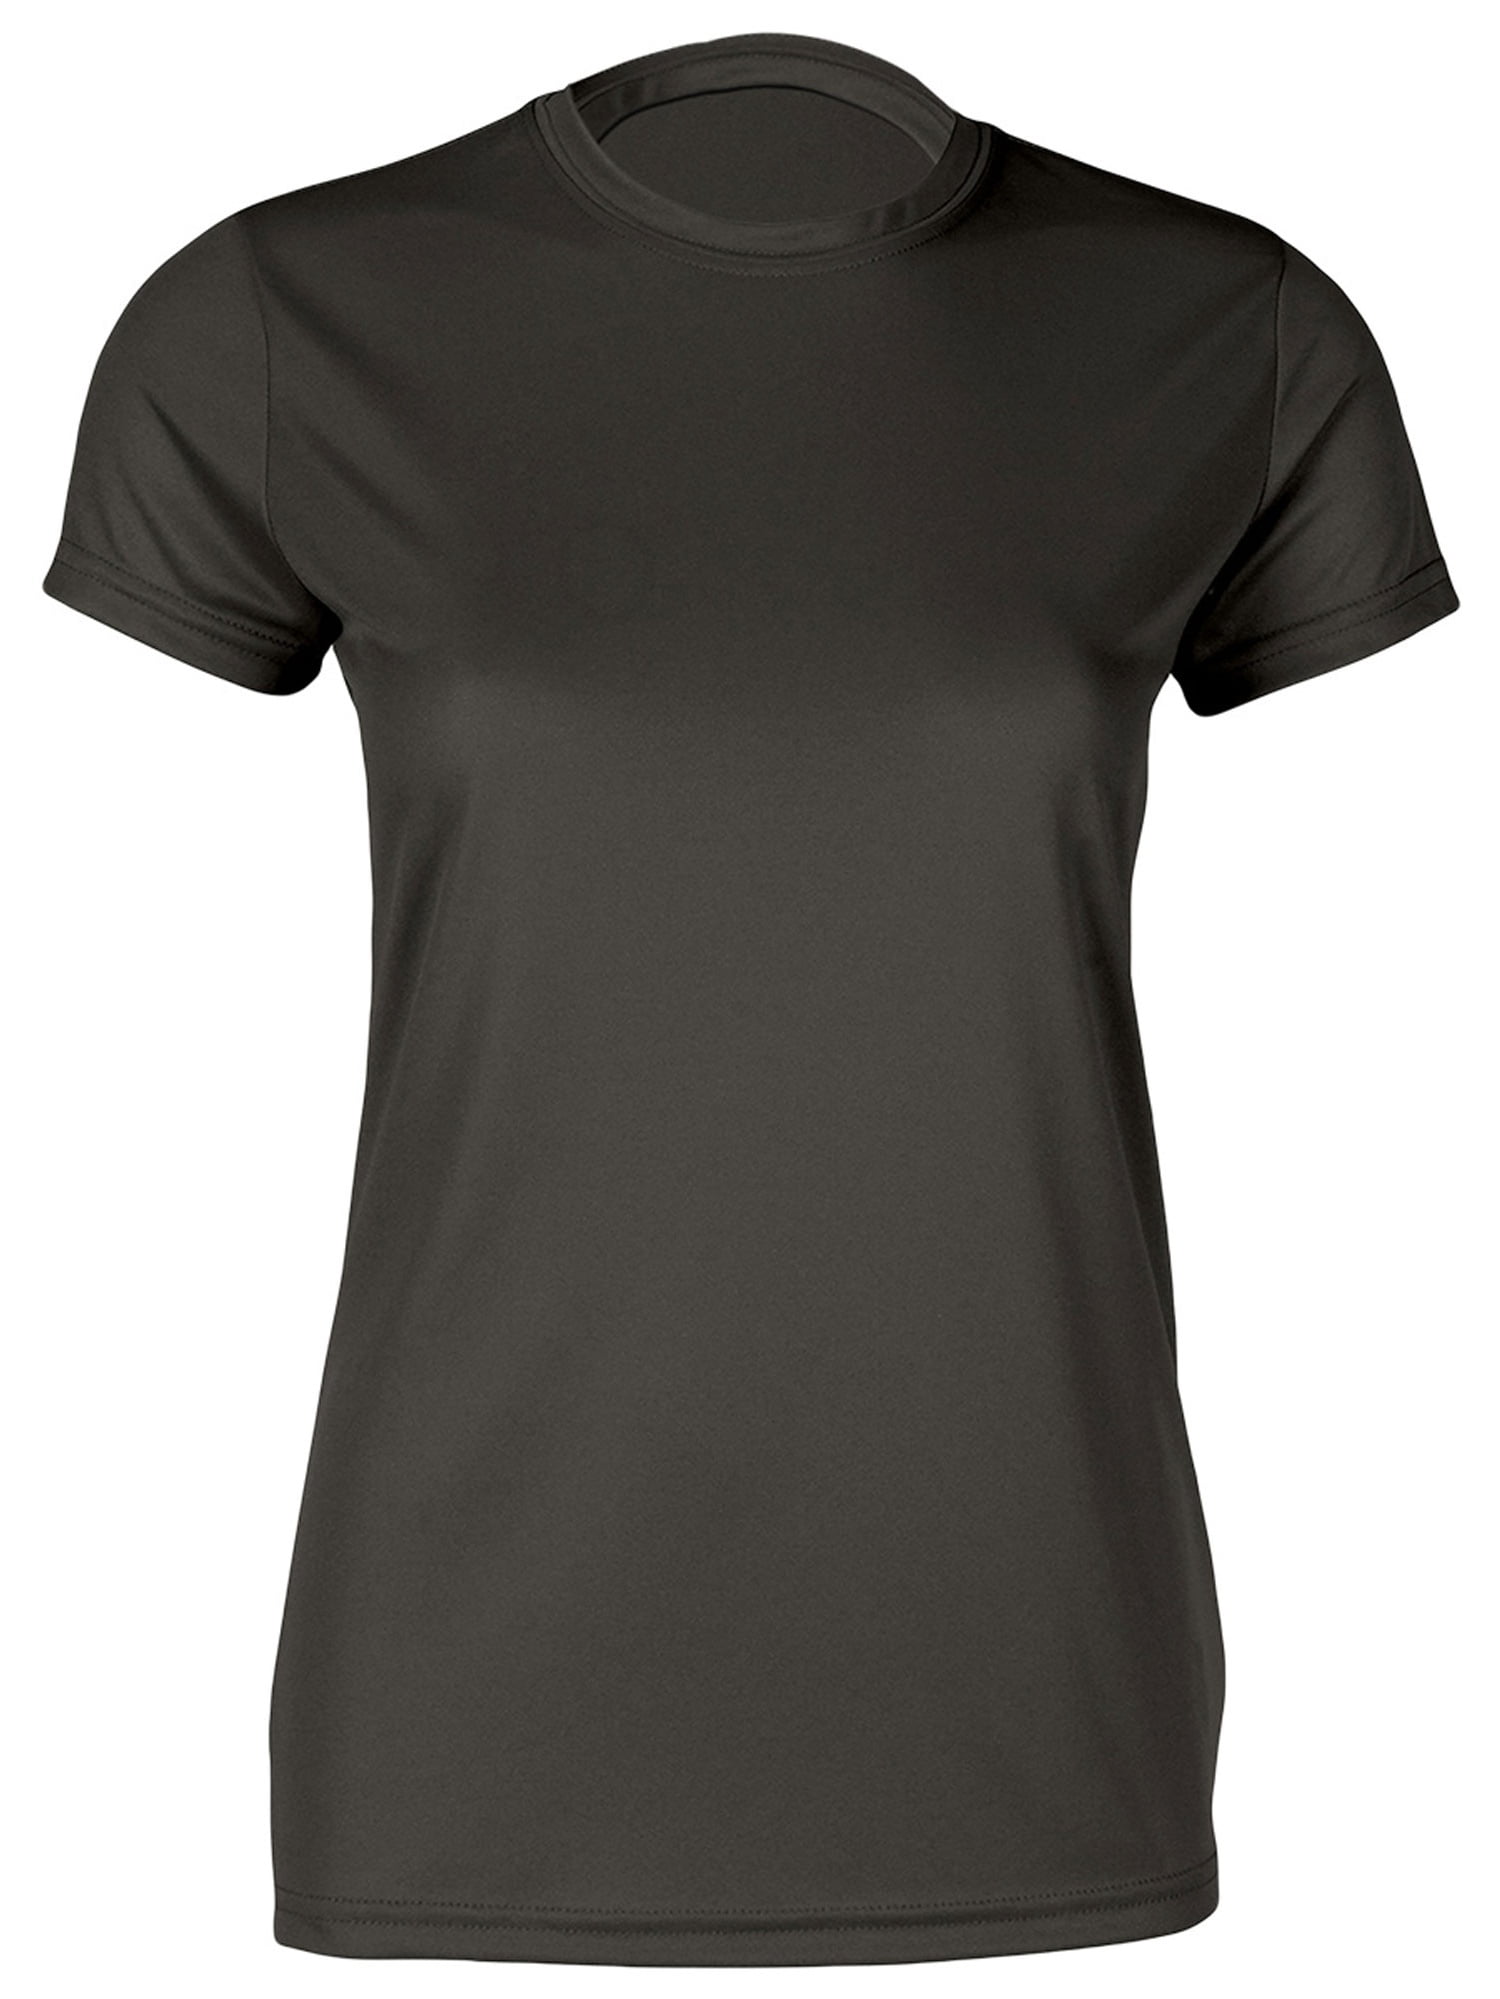 Paragon - Women's Islander Performance T-Shirt - 204 - Navy - Size: S